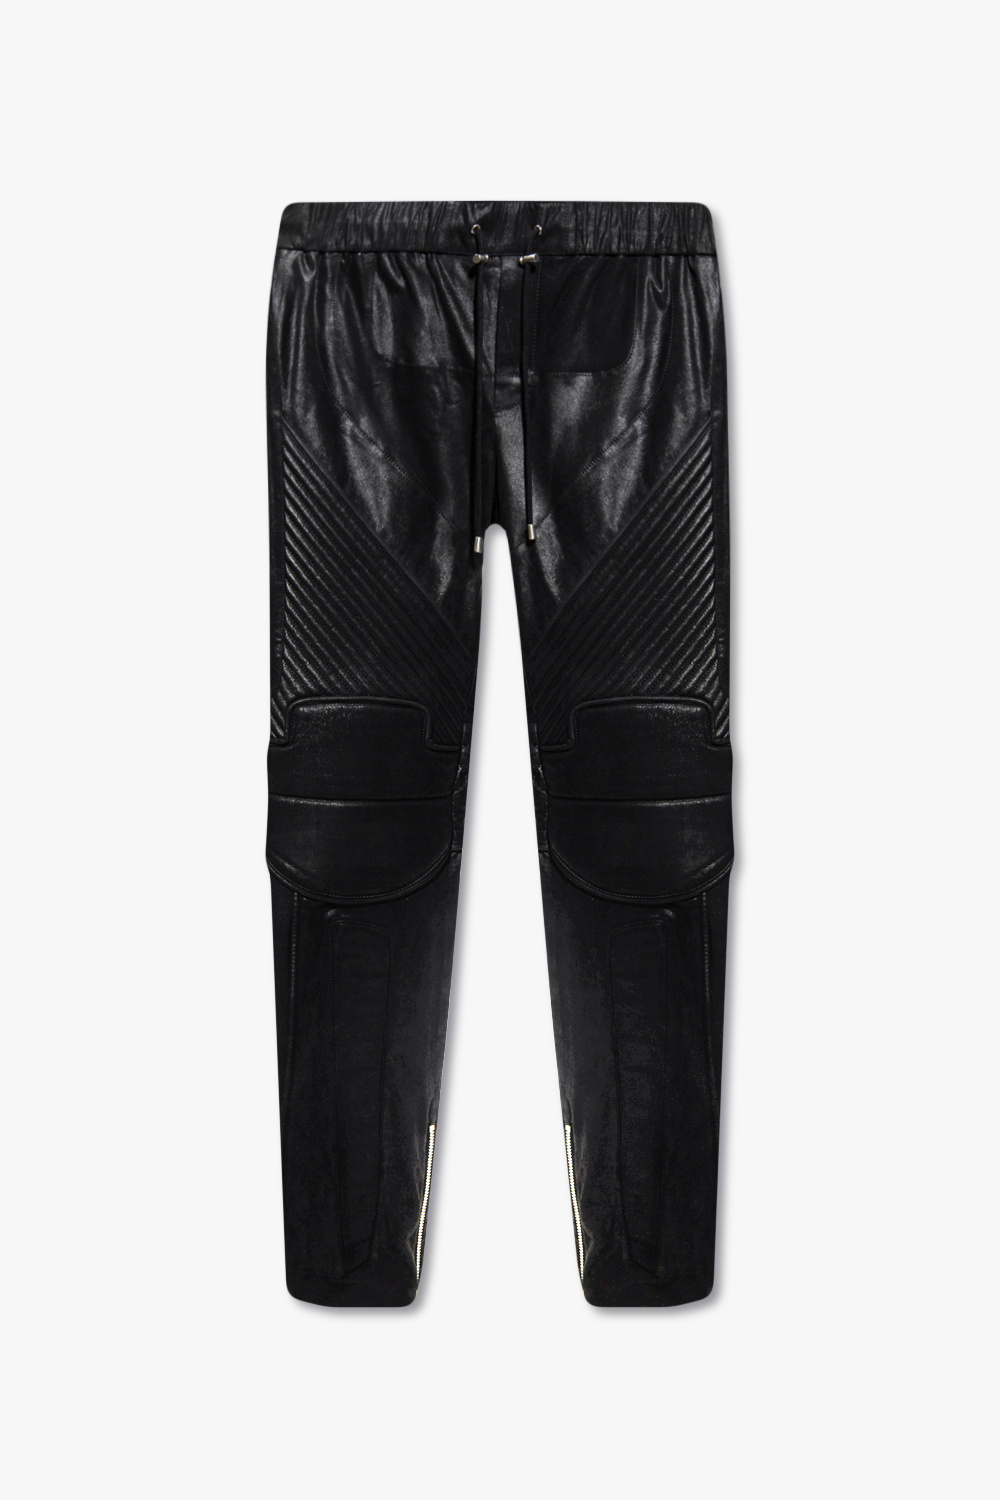 IetpShops Japan - Newalpha Cotton Pants - Black Leather trousers Balmain